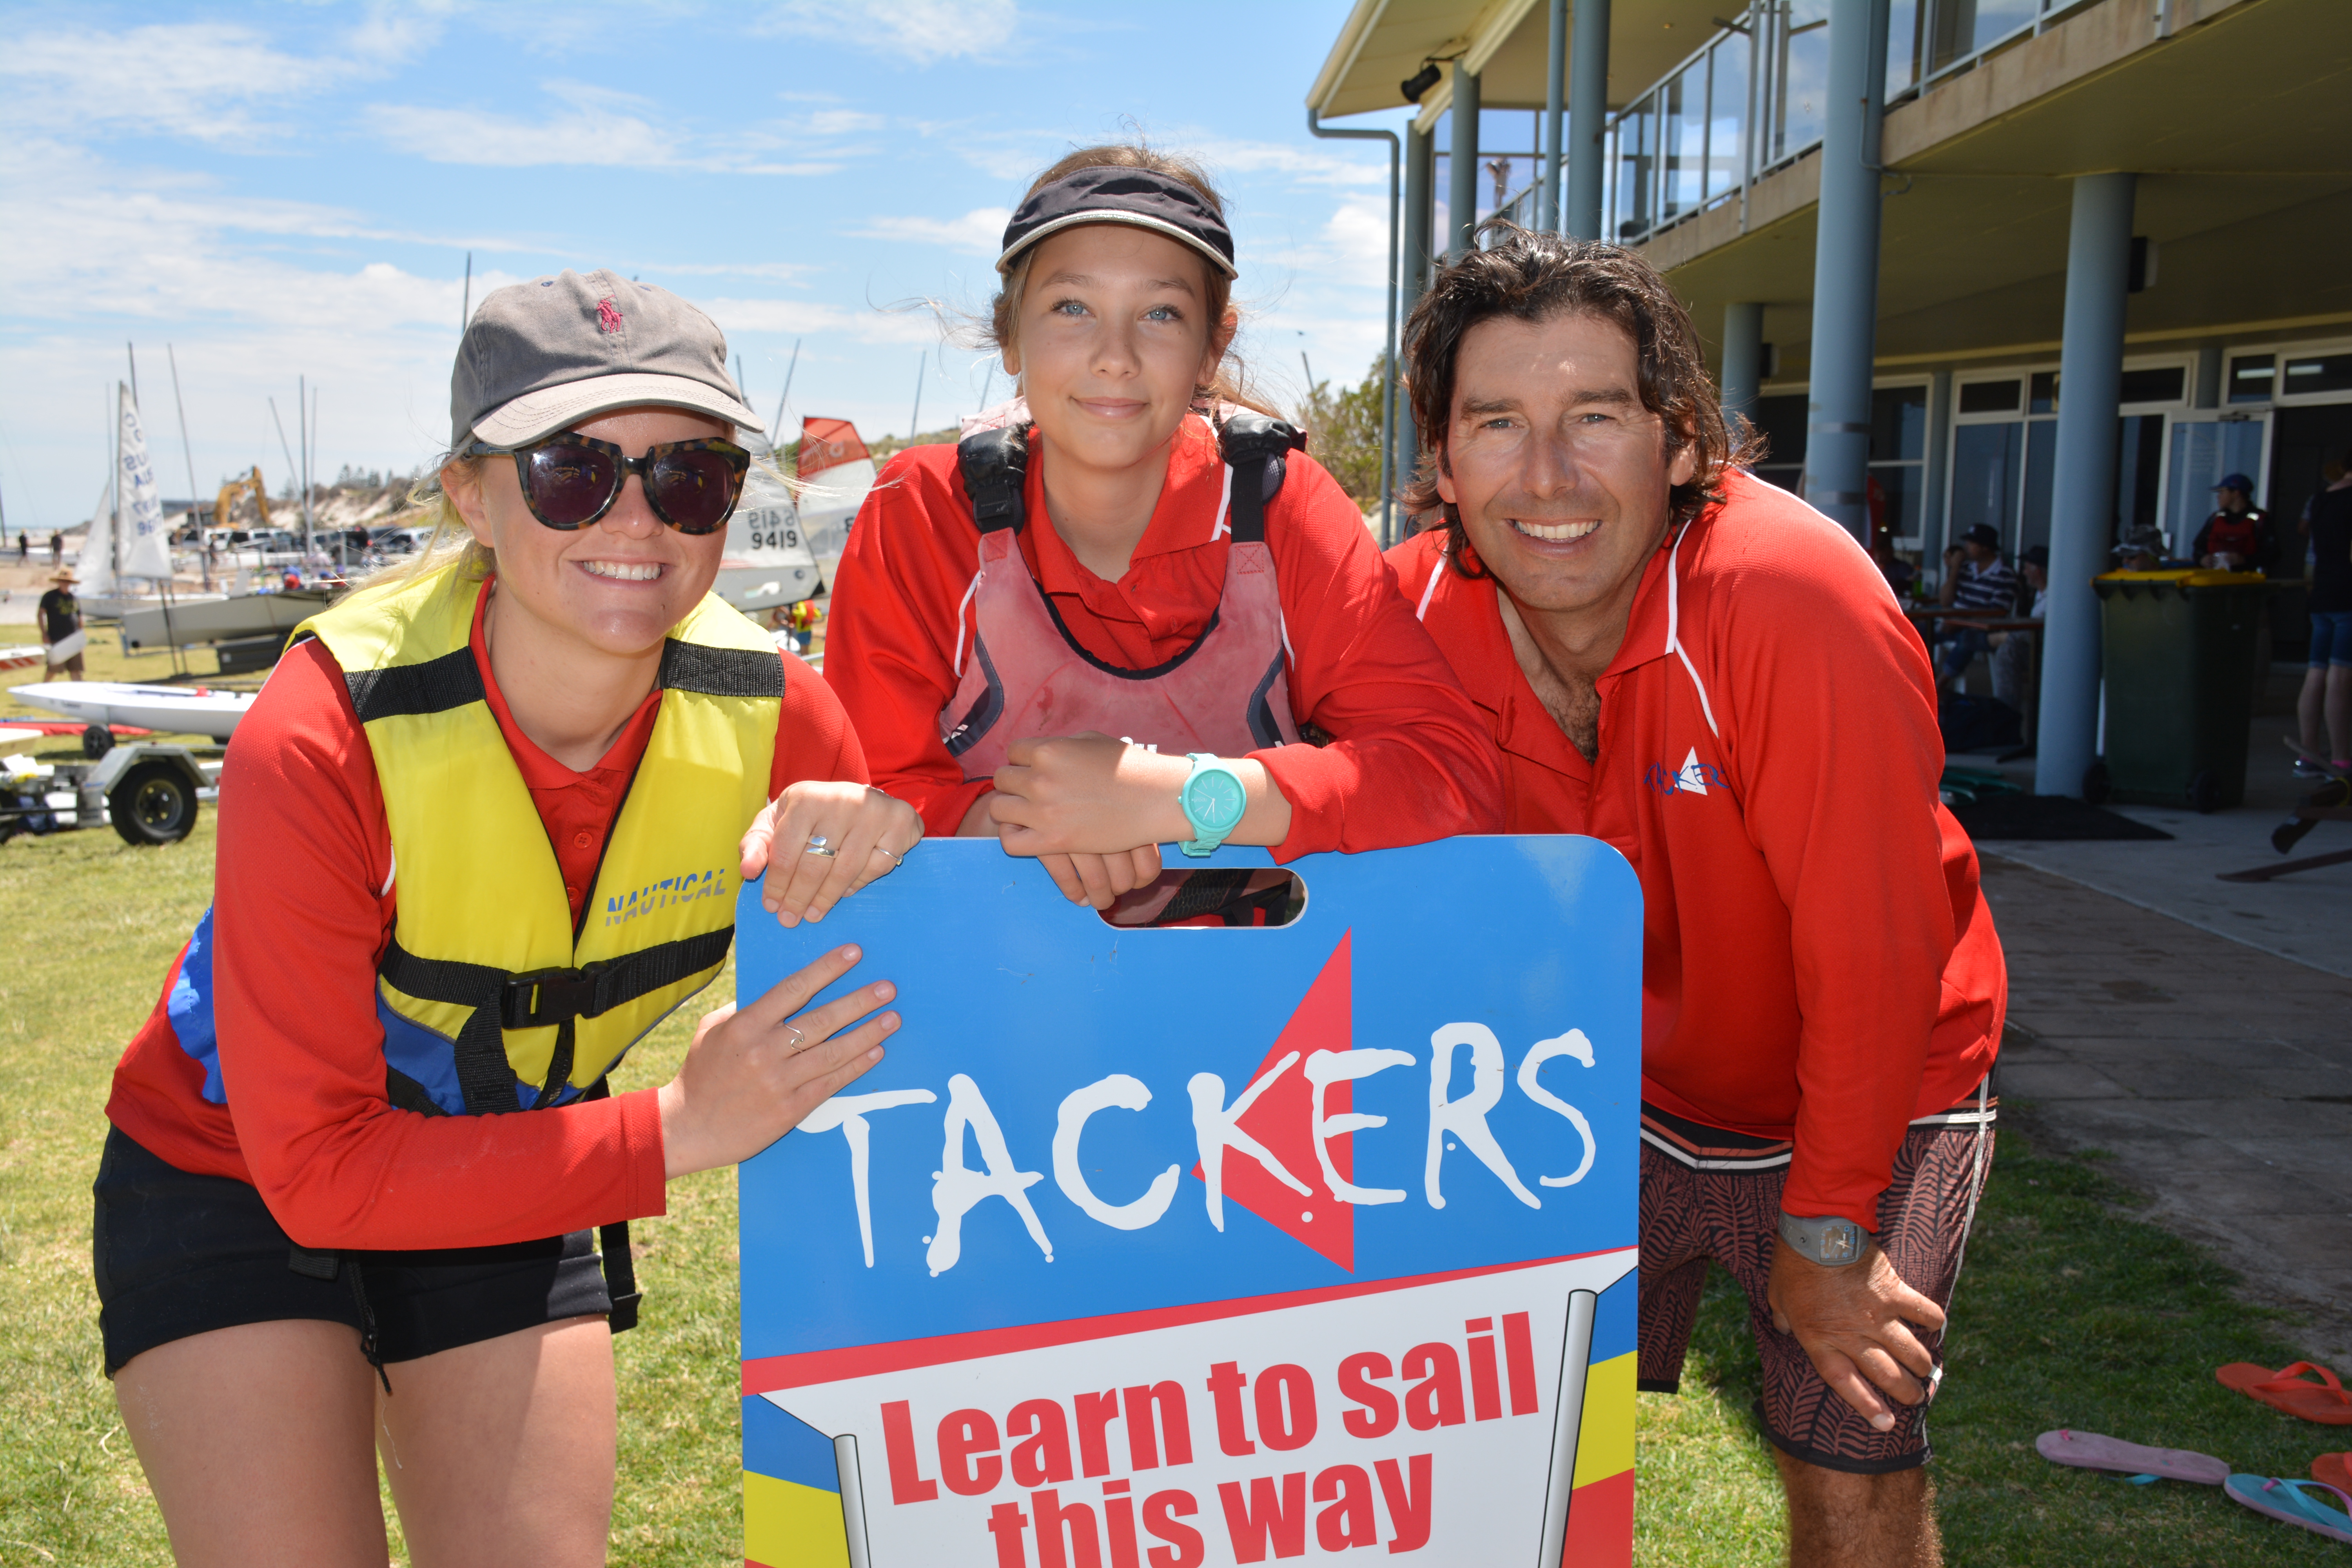 Learn to sail season kicks off in South Australia